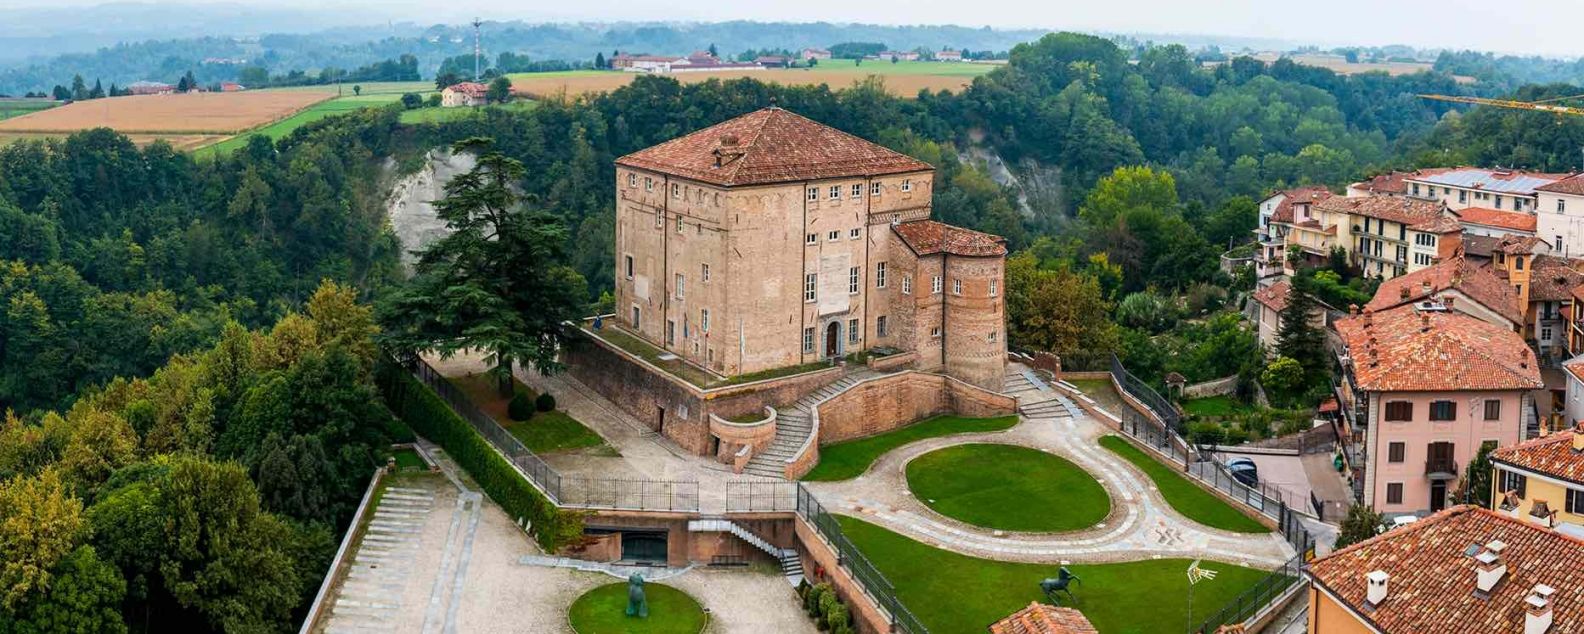 Castello di Carrù in province of Cuneo, Italy